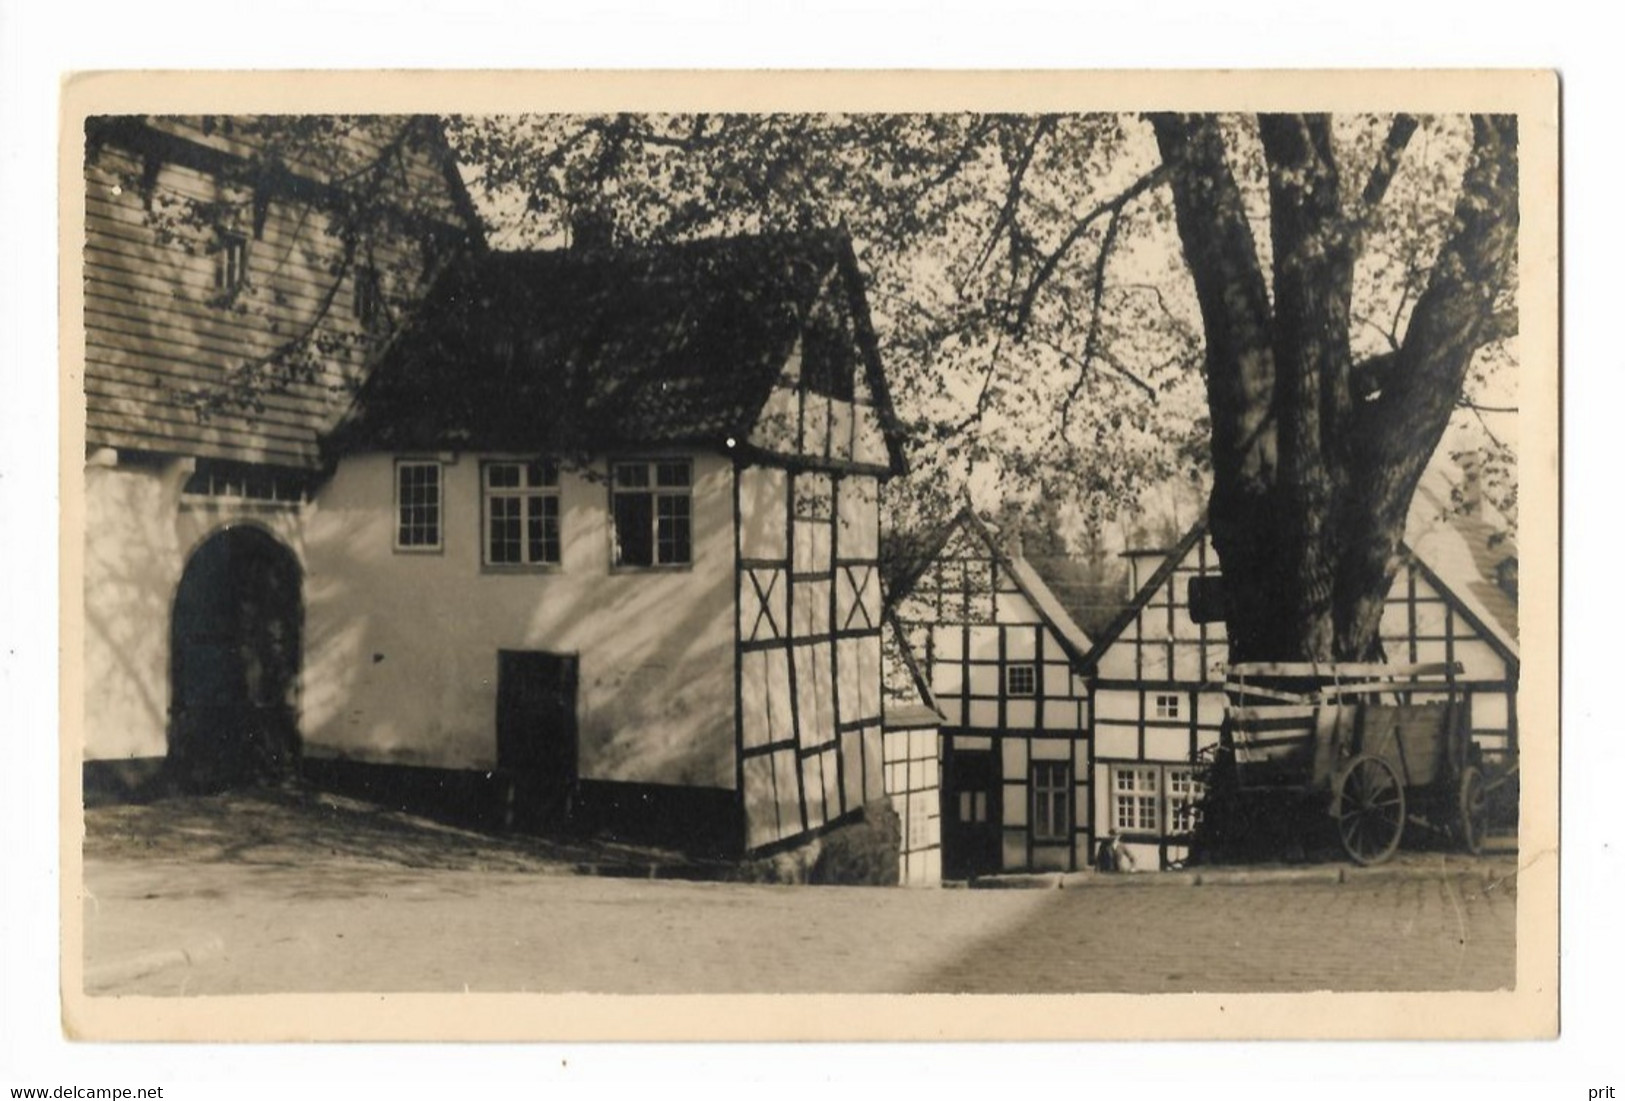 Tecklenburg I.Teutoburger Wald, Steinfurt 1920s Unused Photo Postcard. Publisher Foto-Howe - Steinfurt